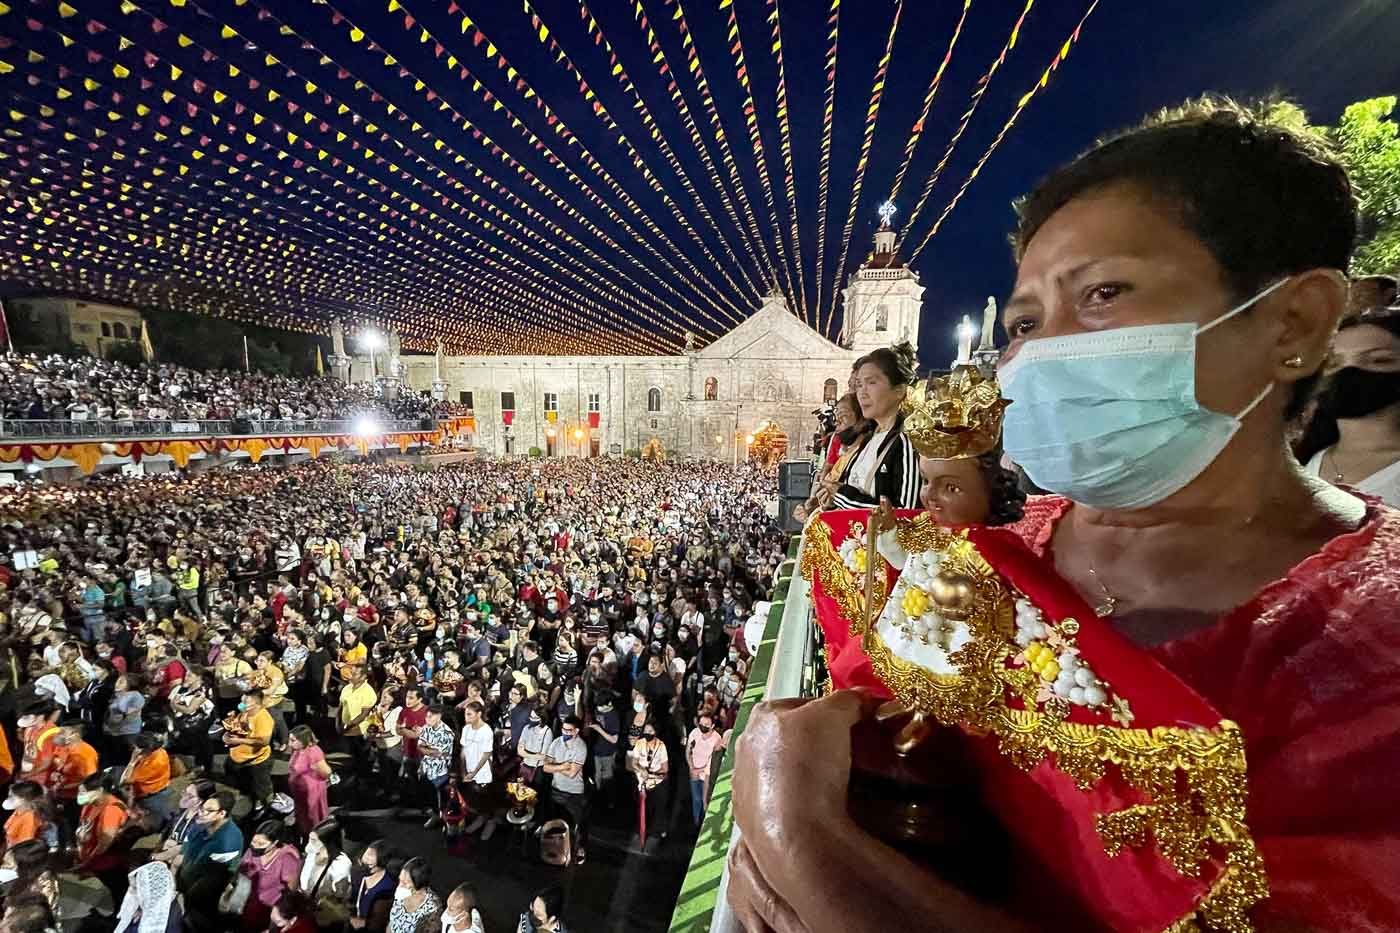 300,000 devotees join dawn kickoff of Cebu’s 458th Fiesta Señor celebration